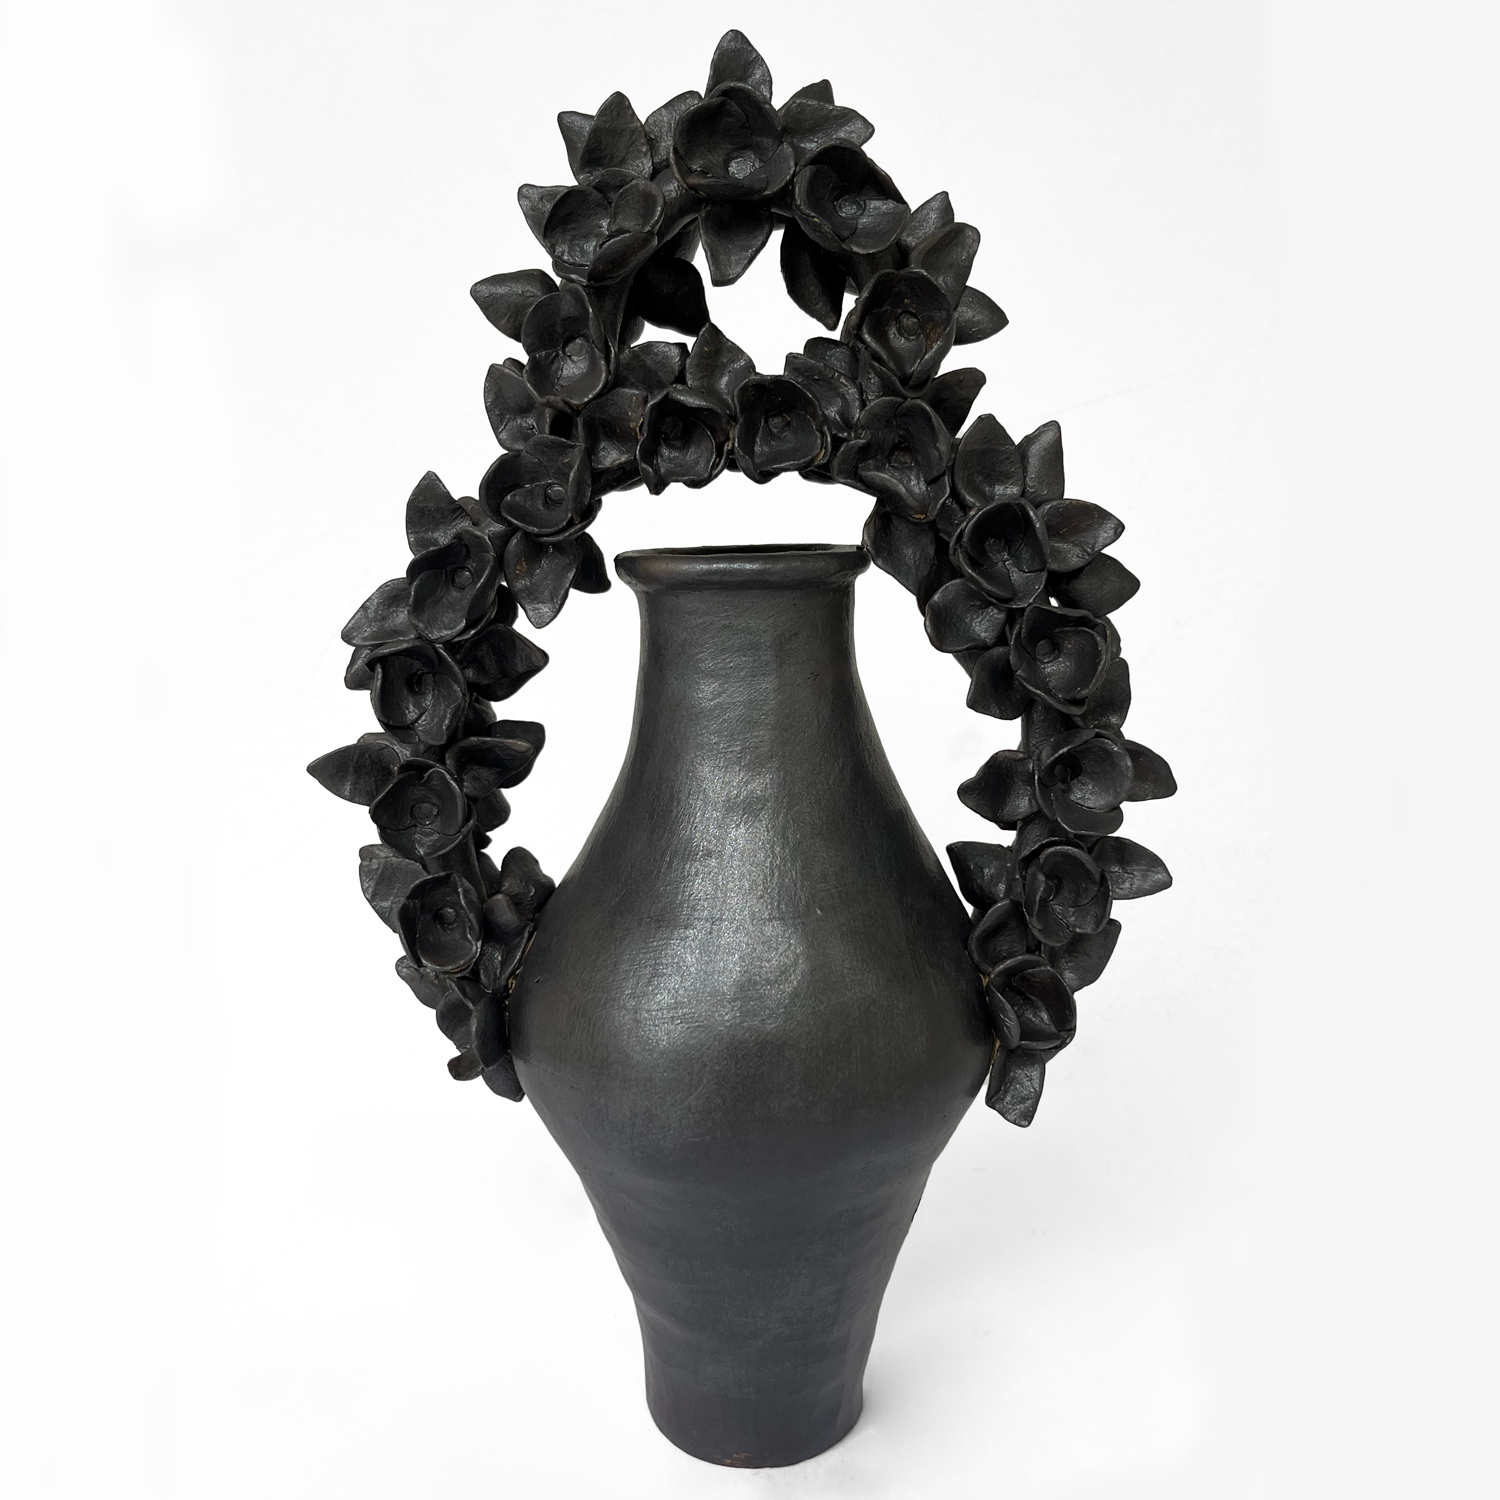 Mariana Bolanos Inclan: Tree of Life Vase Product Image 1 of 1